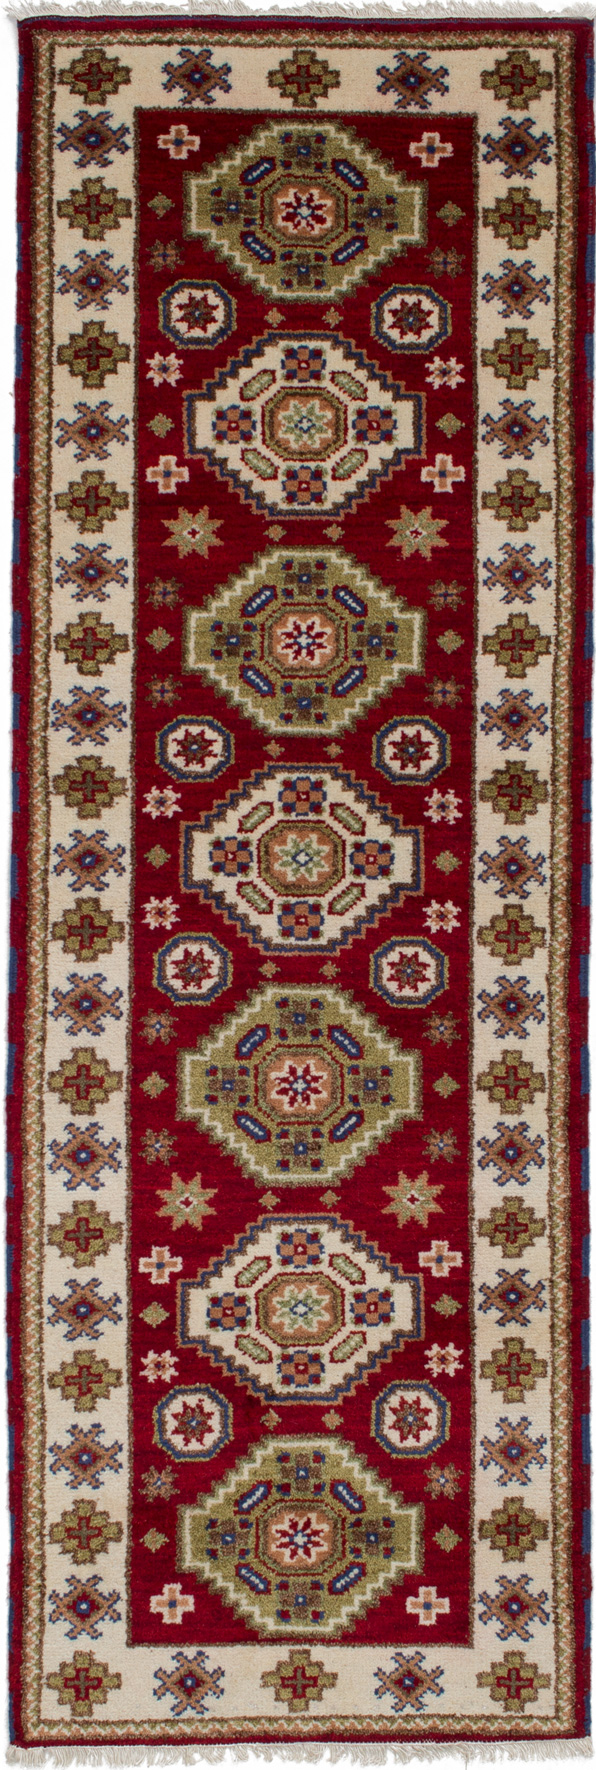 Hand-knotted Royal Kazak Dark Red Wool Rug 2'9" x 8'3"  Size: 2'9" x 8'3"  